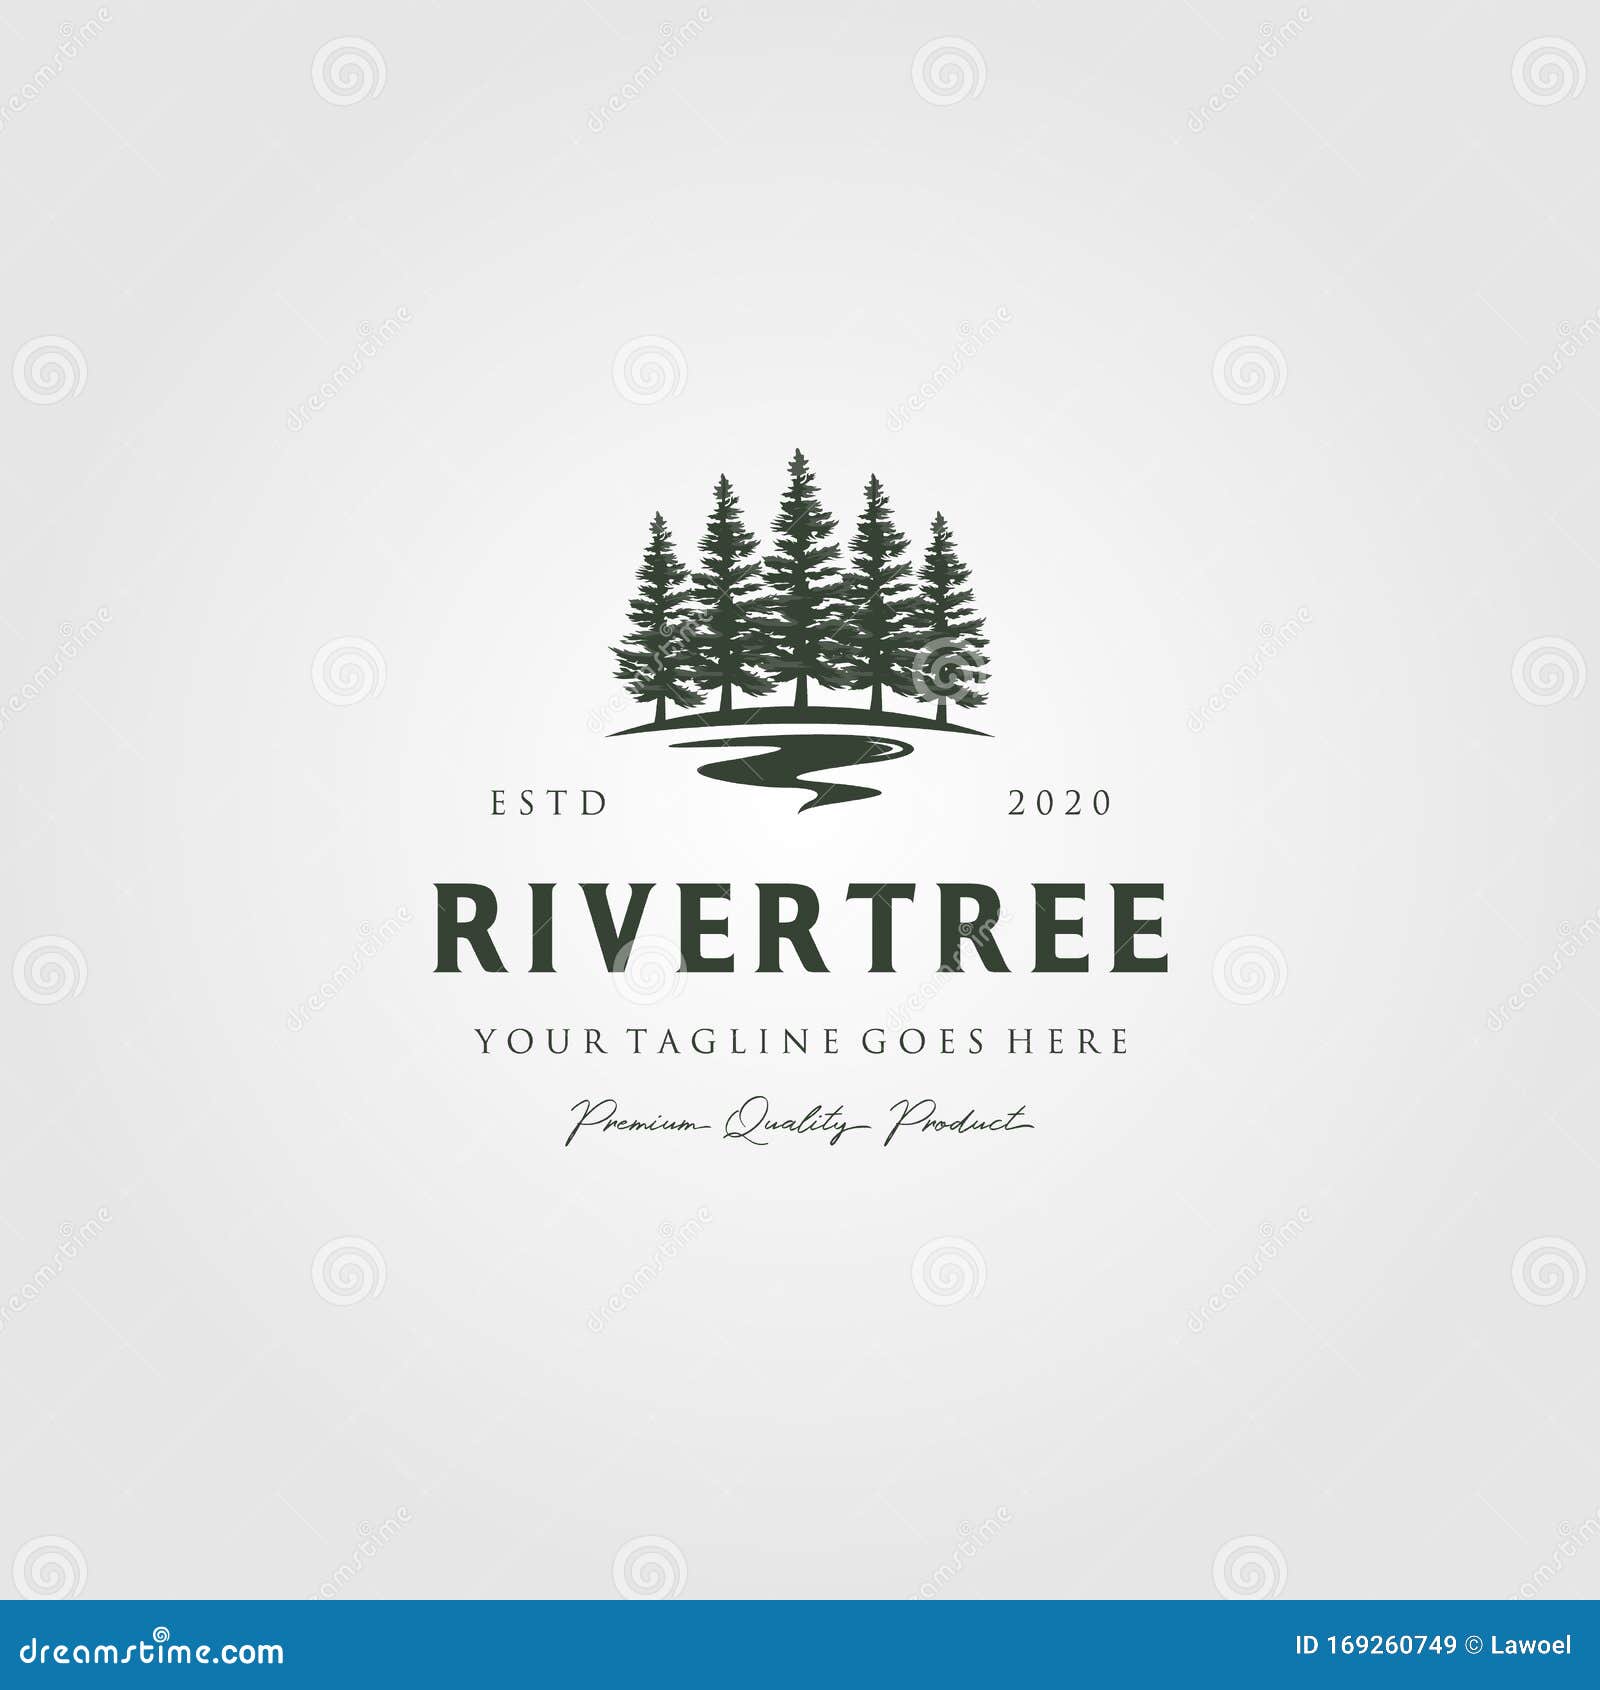 evergreen pine tree logo vintage with river creek  emblem  